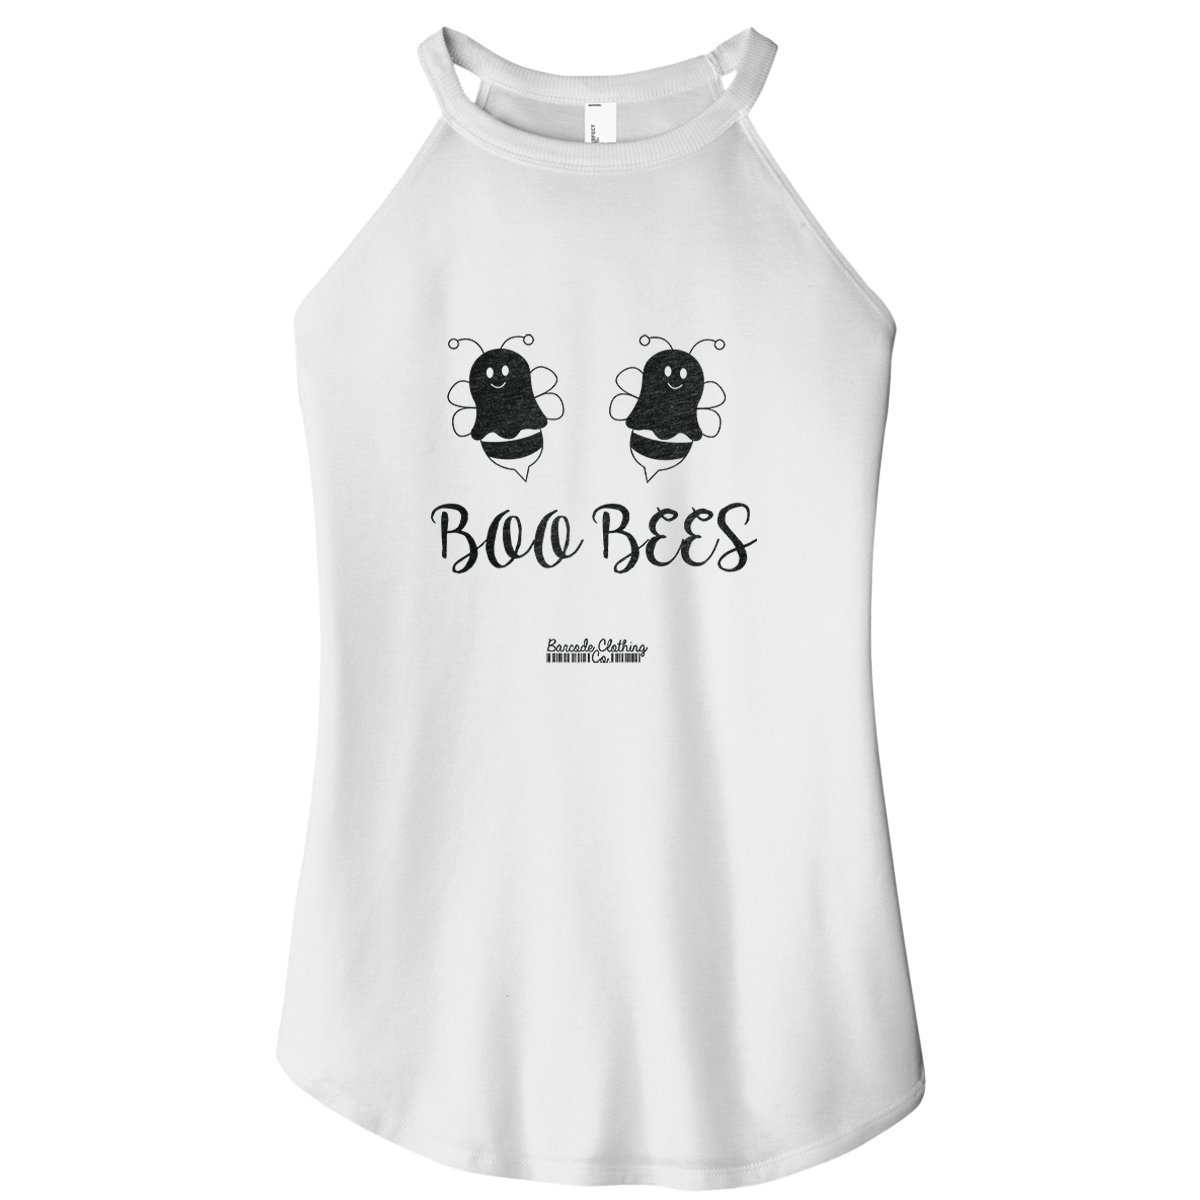 Boo Bees Rocker Tank